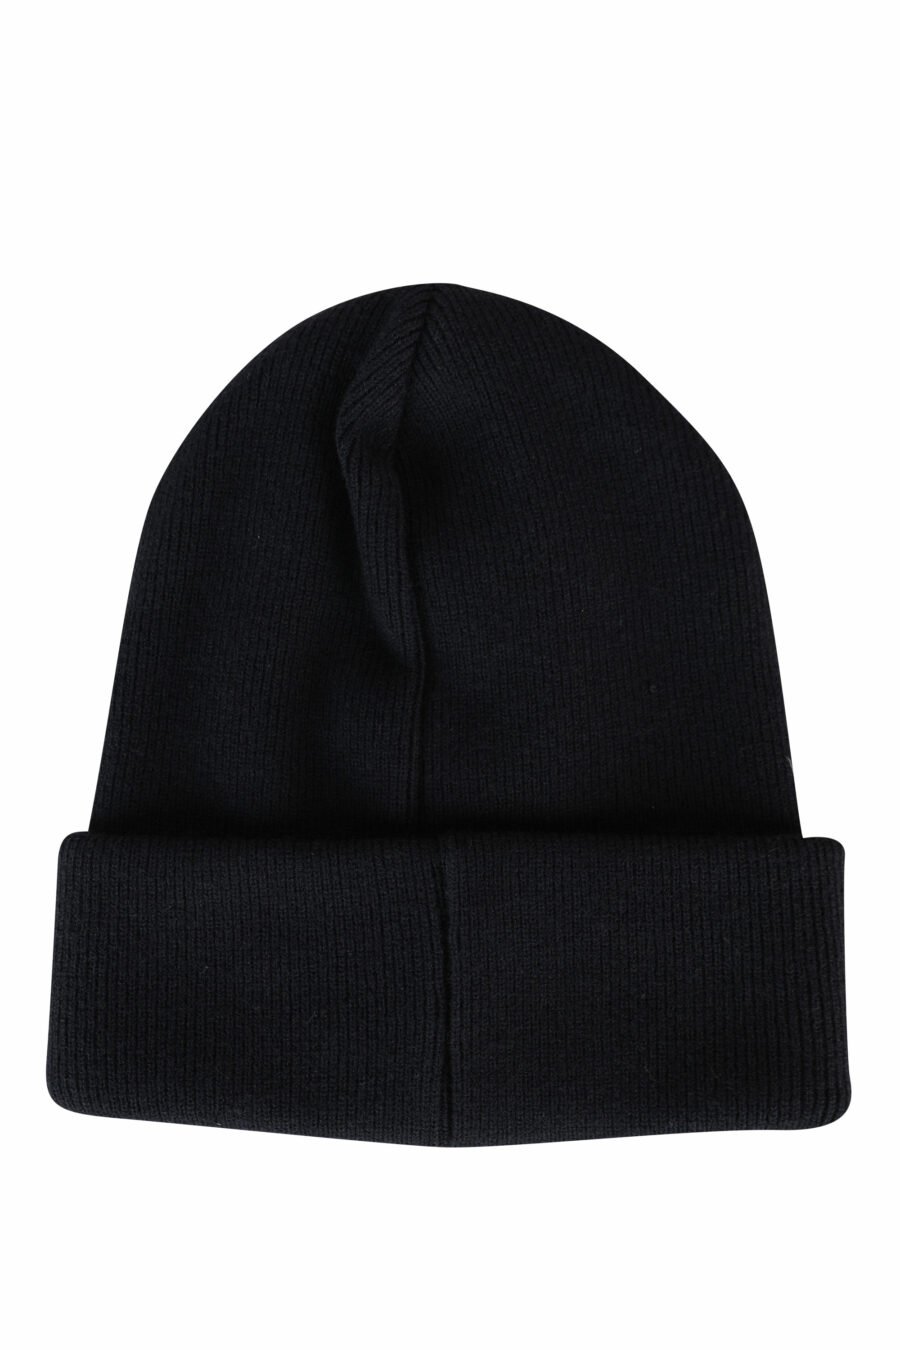 Black cap with fuchsia maxilogo - 8055777217382 1